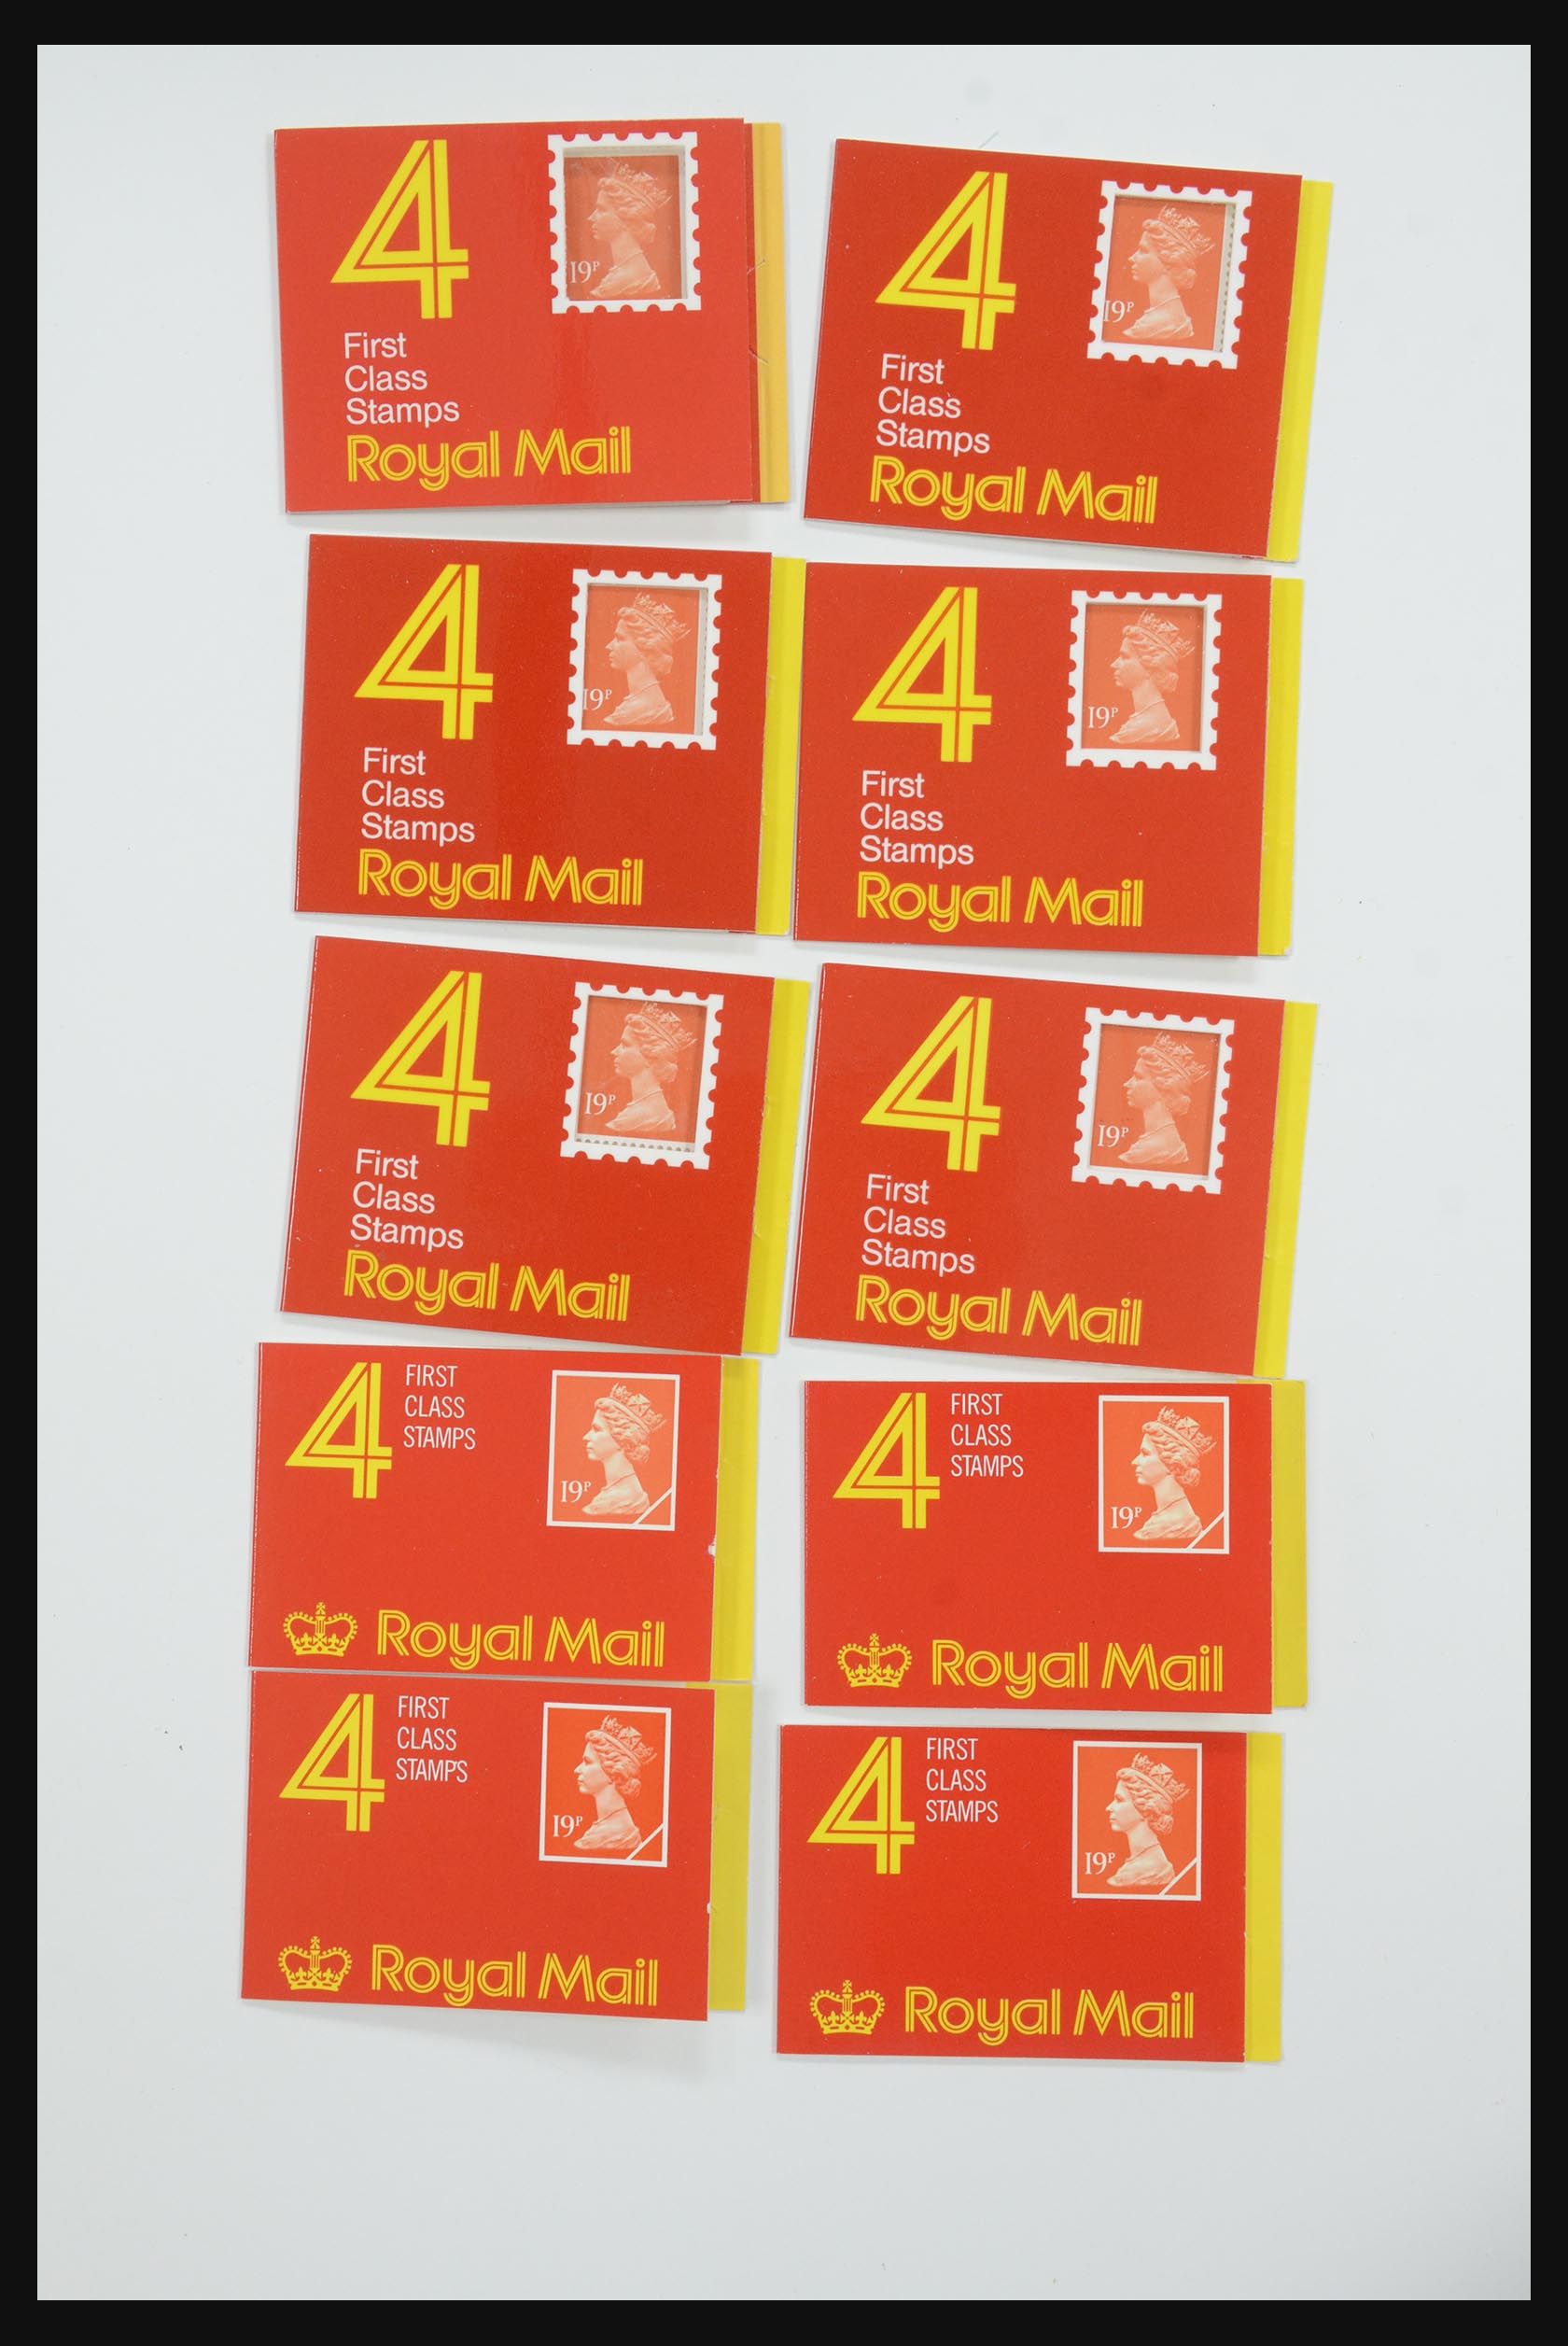 31961 066 - 31961 Great Britain stampbooklets 1971-1999.